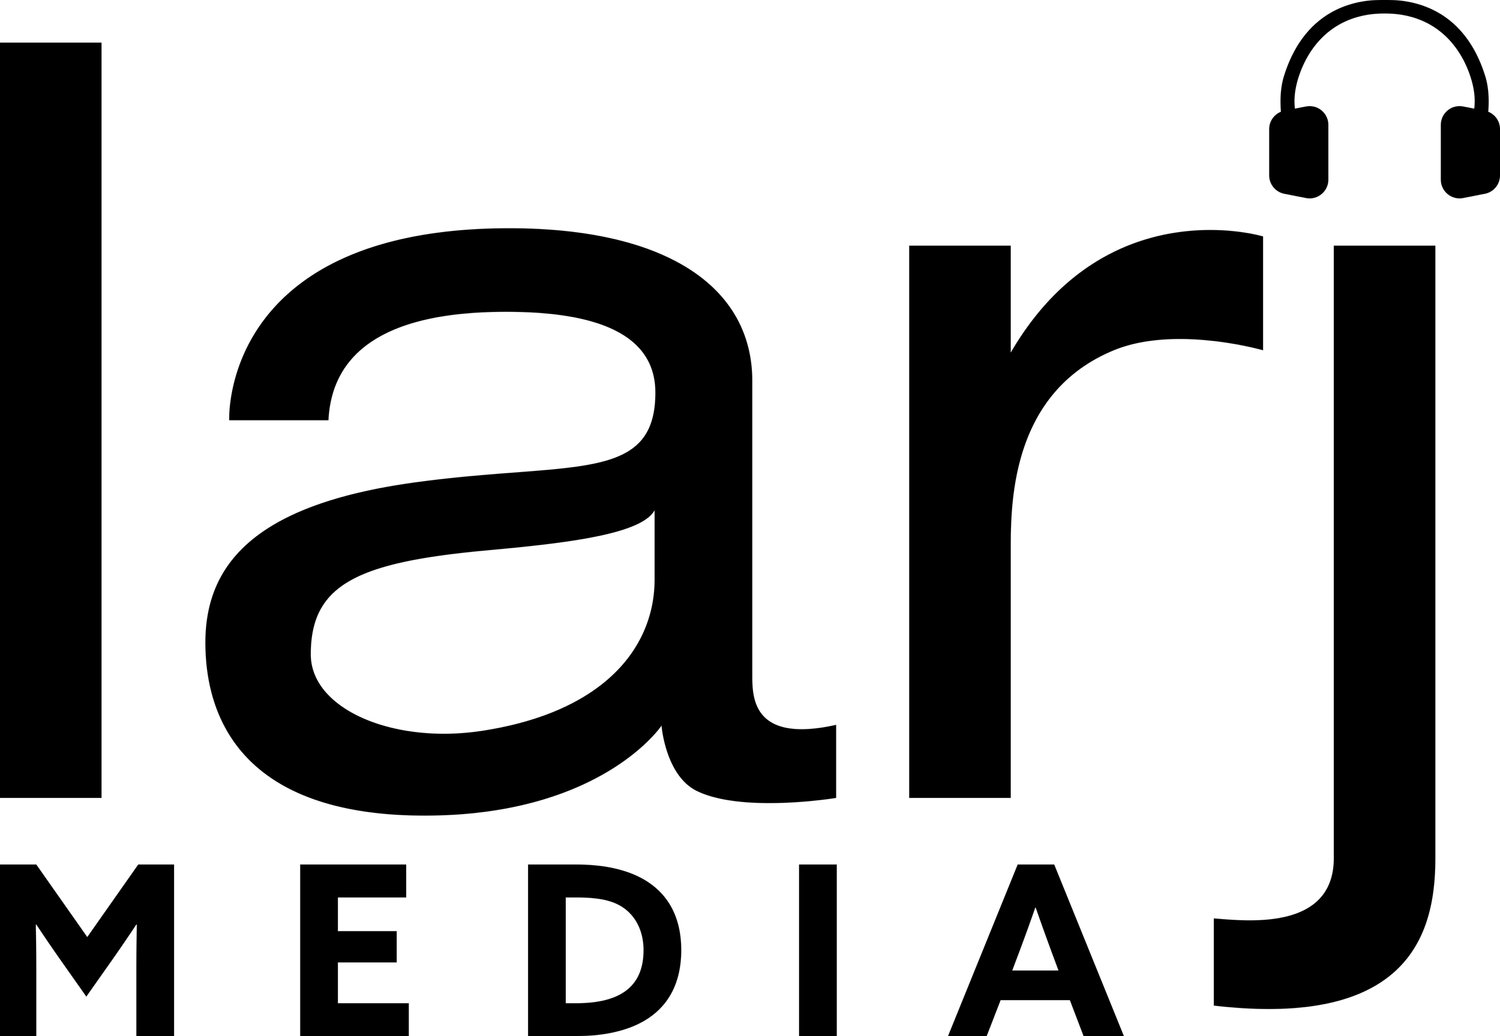 Larj Media